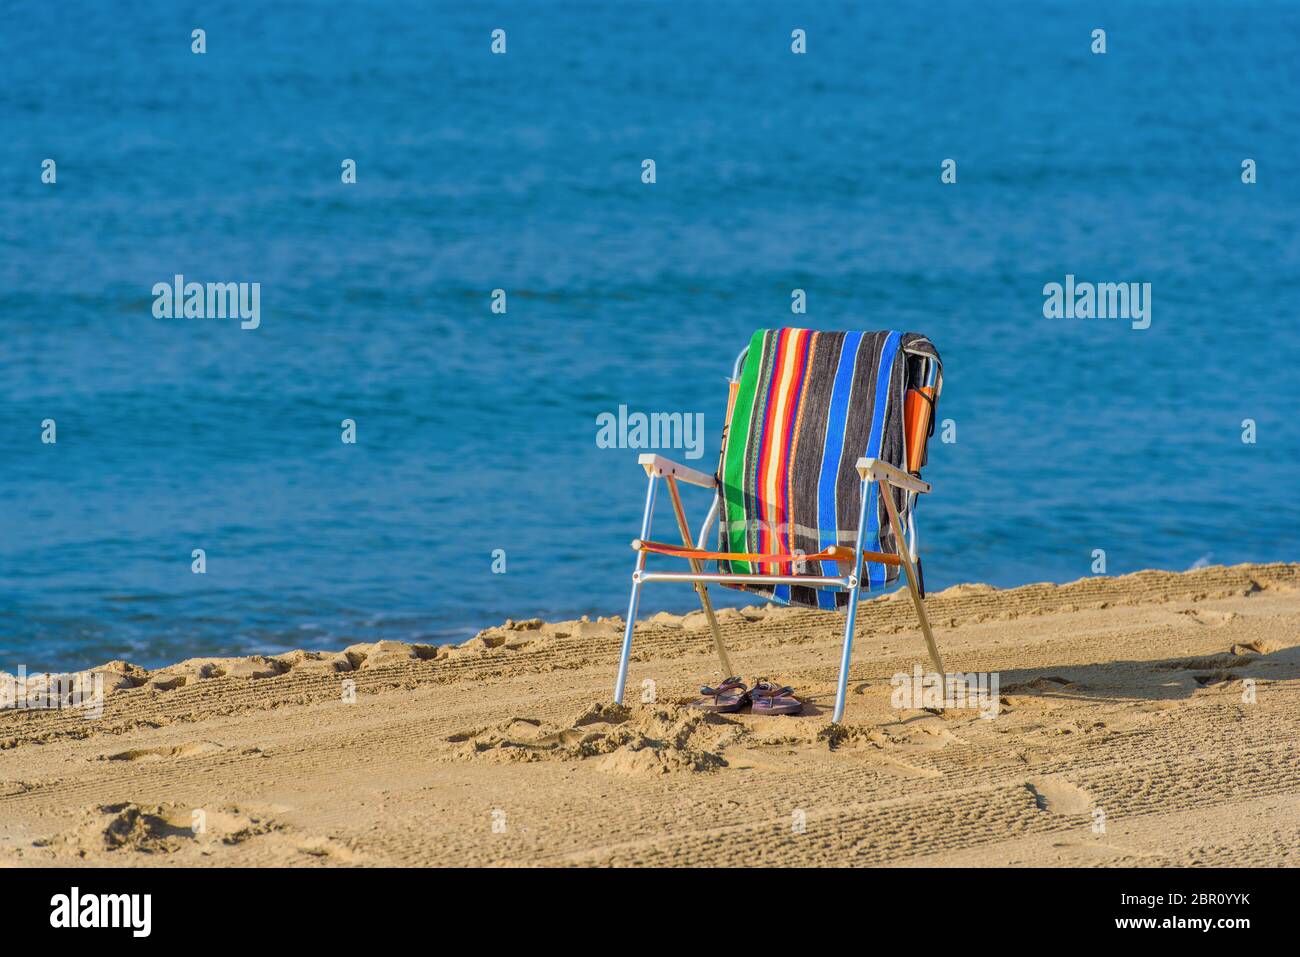 Empty chair on sandy beach, blue sea background, Costa Dorada, Spain. copy space Stock Photo